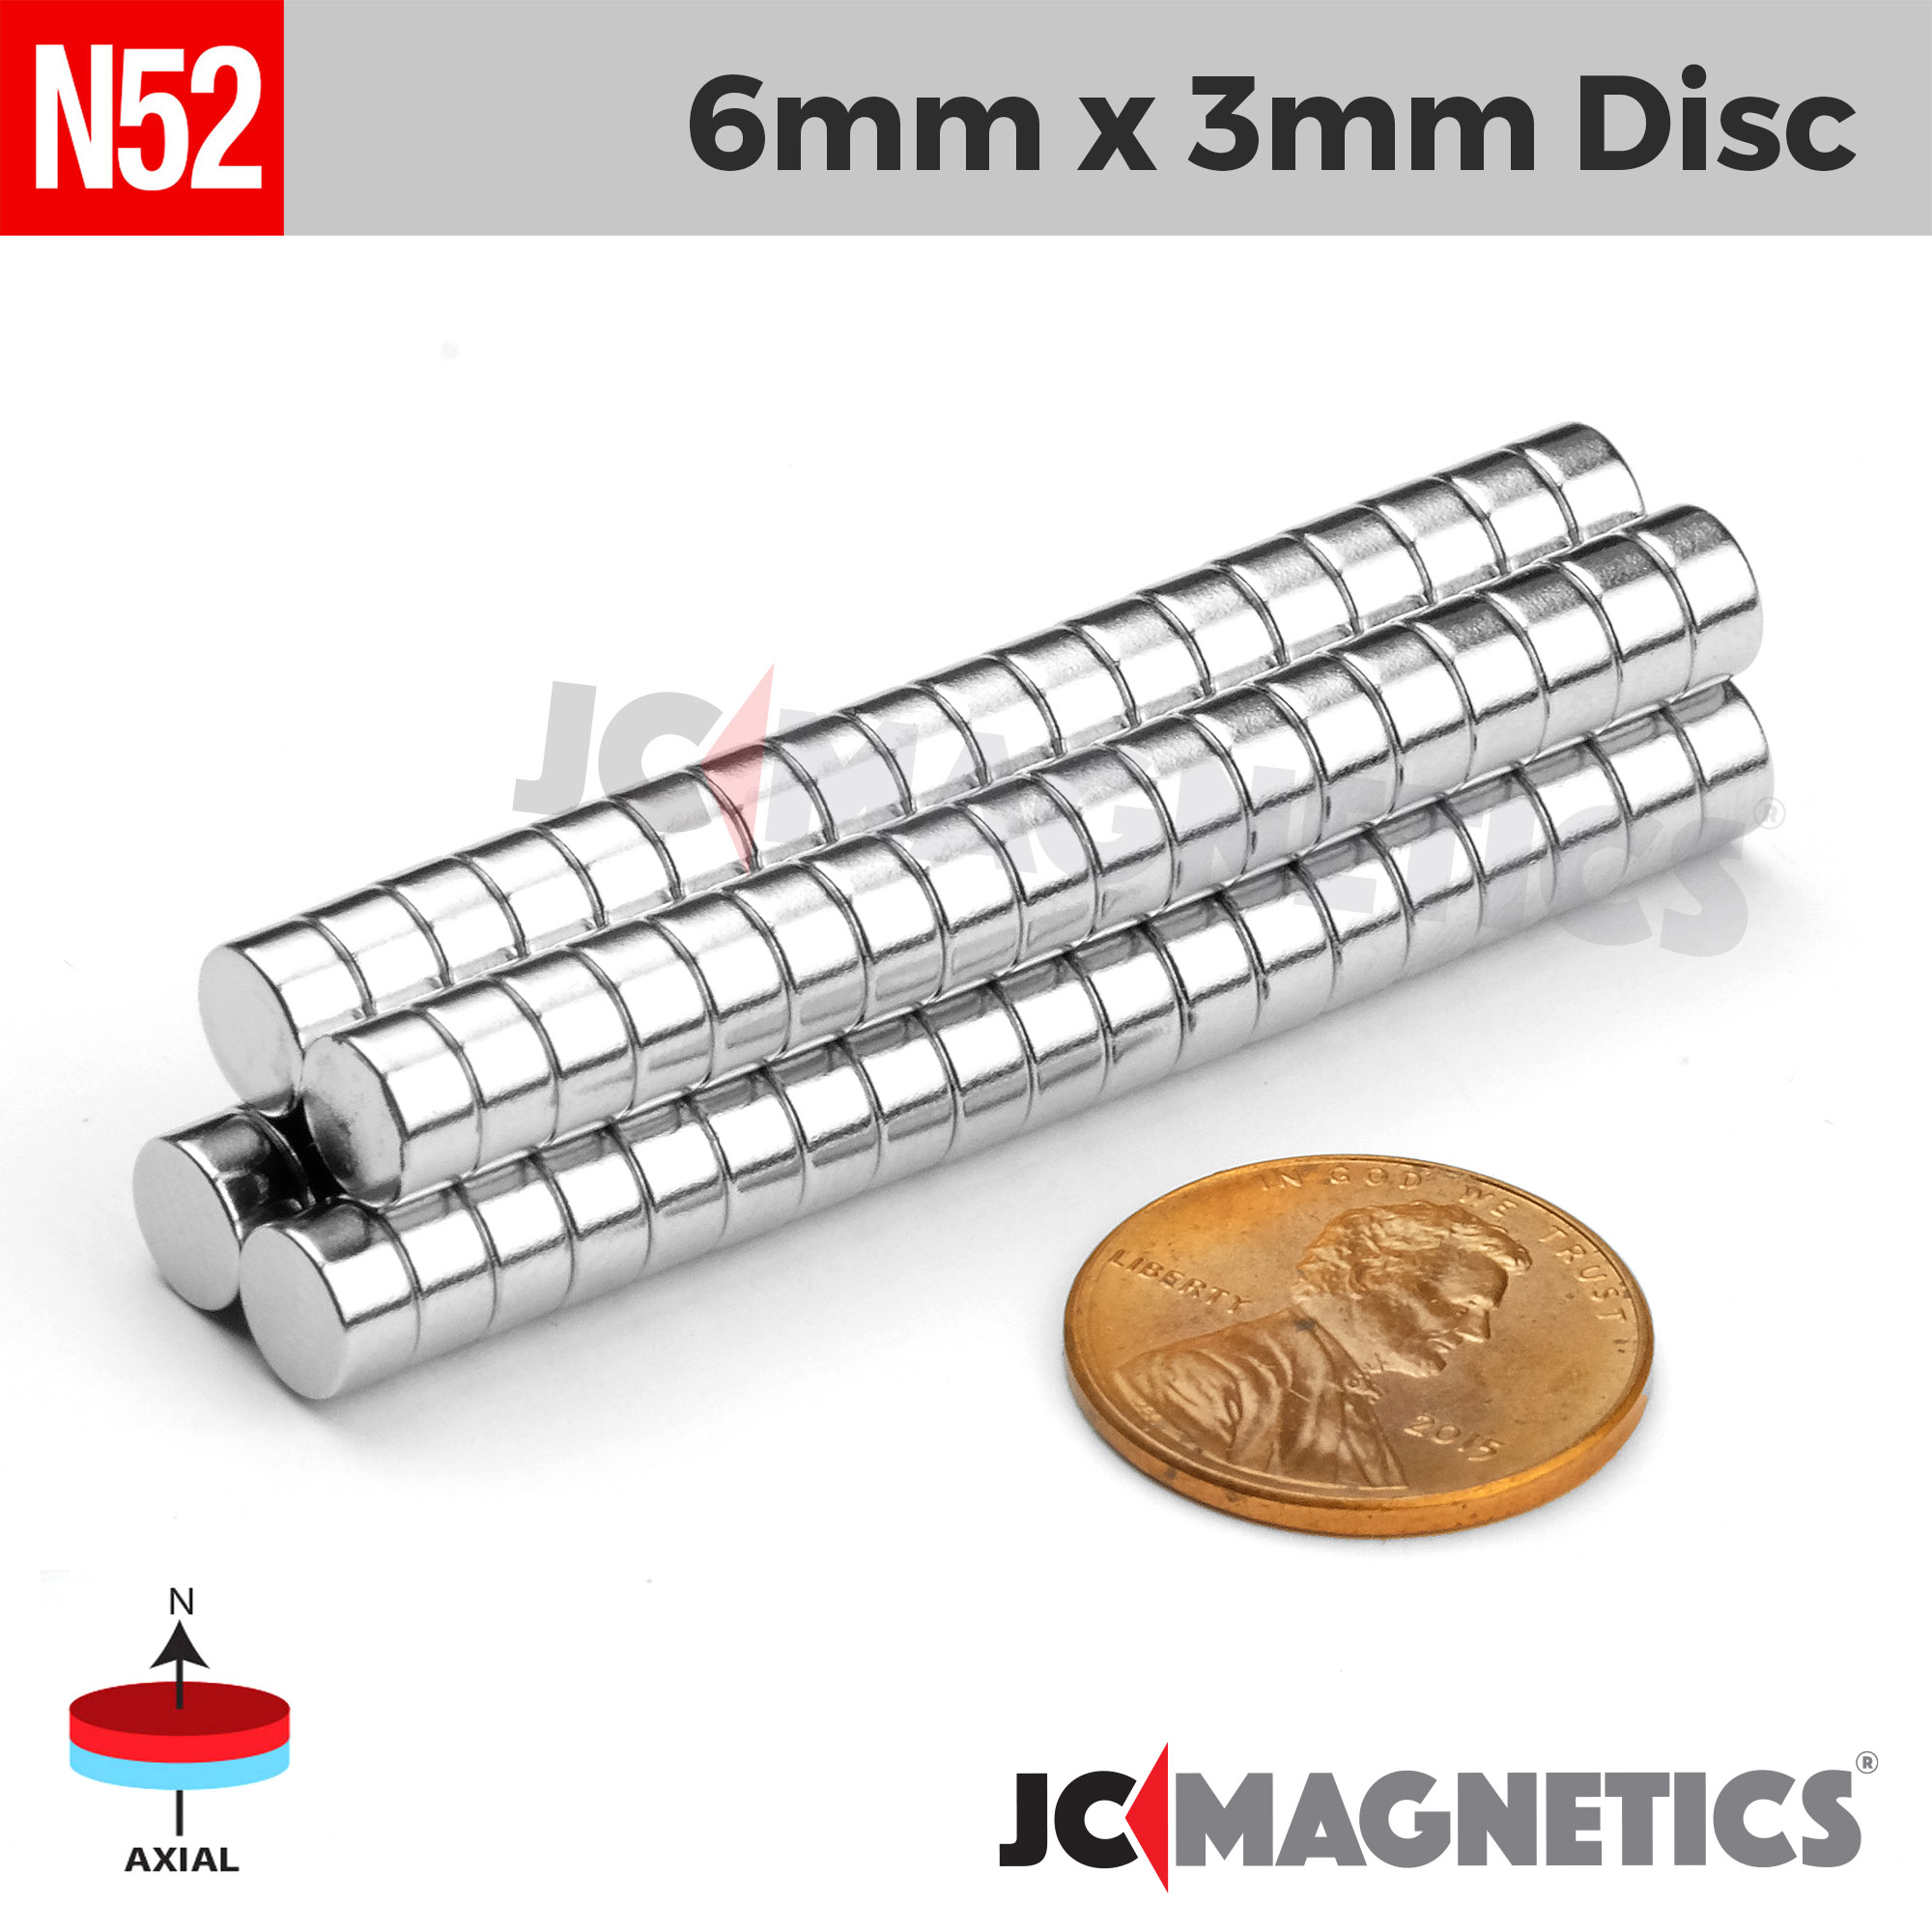 https://jc-magnetics.com/image/cache/catalog/magnets/6mmx3nnm-magnet-disc-2000x2000.jpg